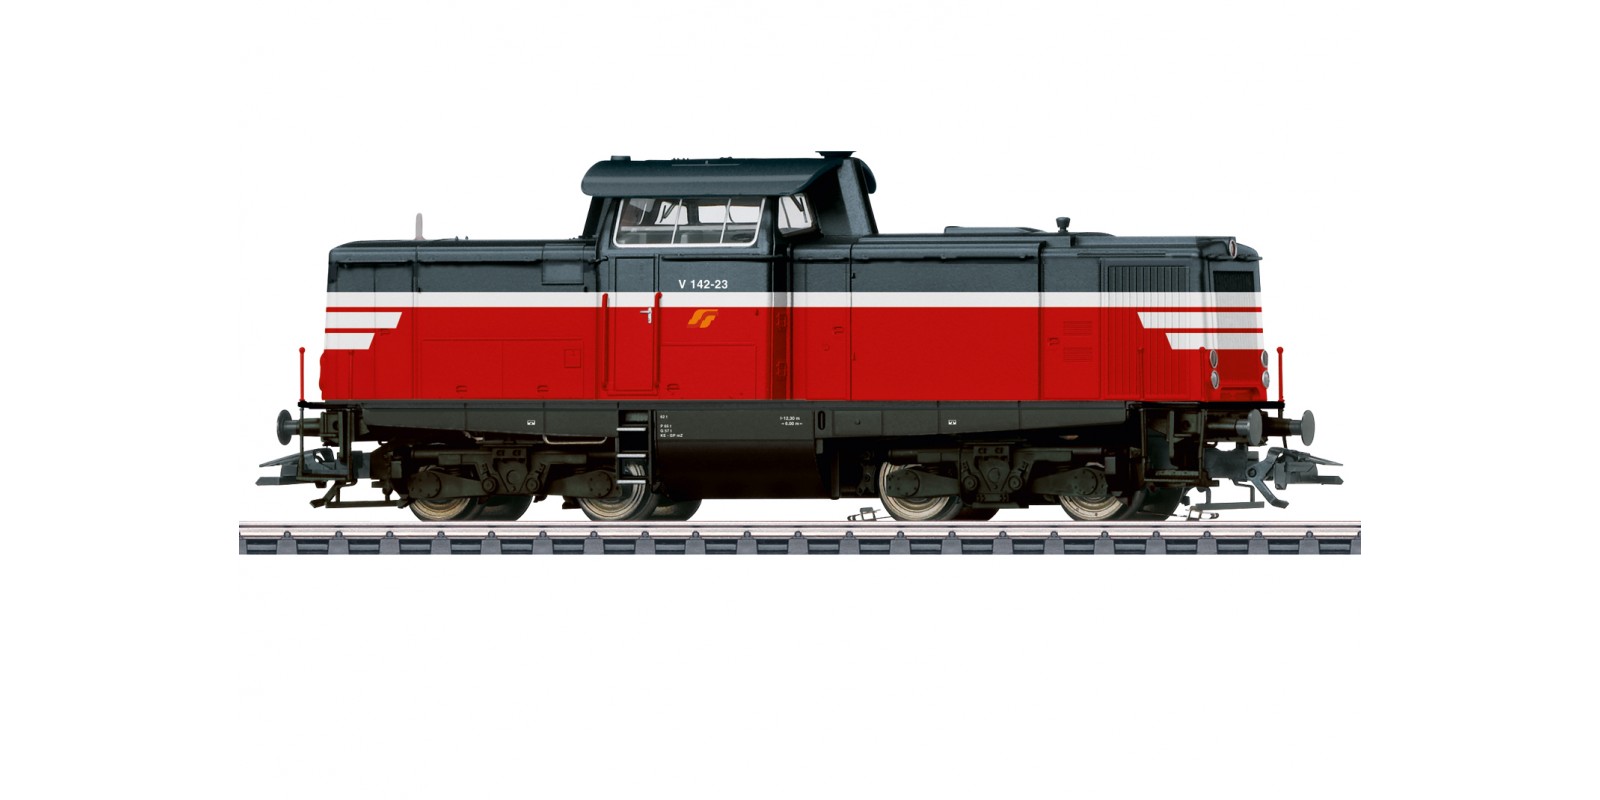 37174 Class V 142 Diesel Locomotive